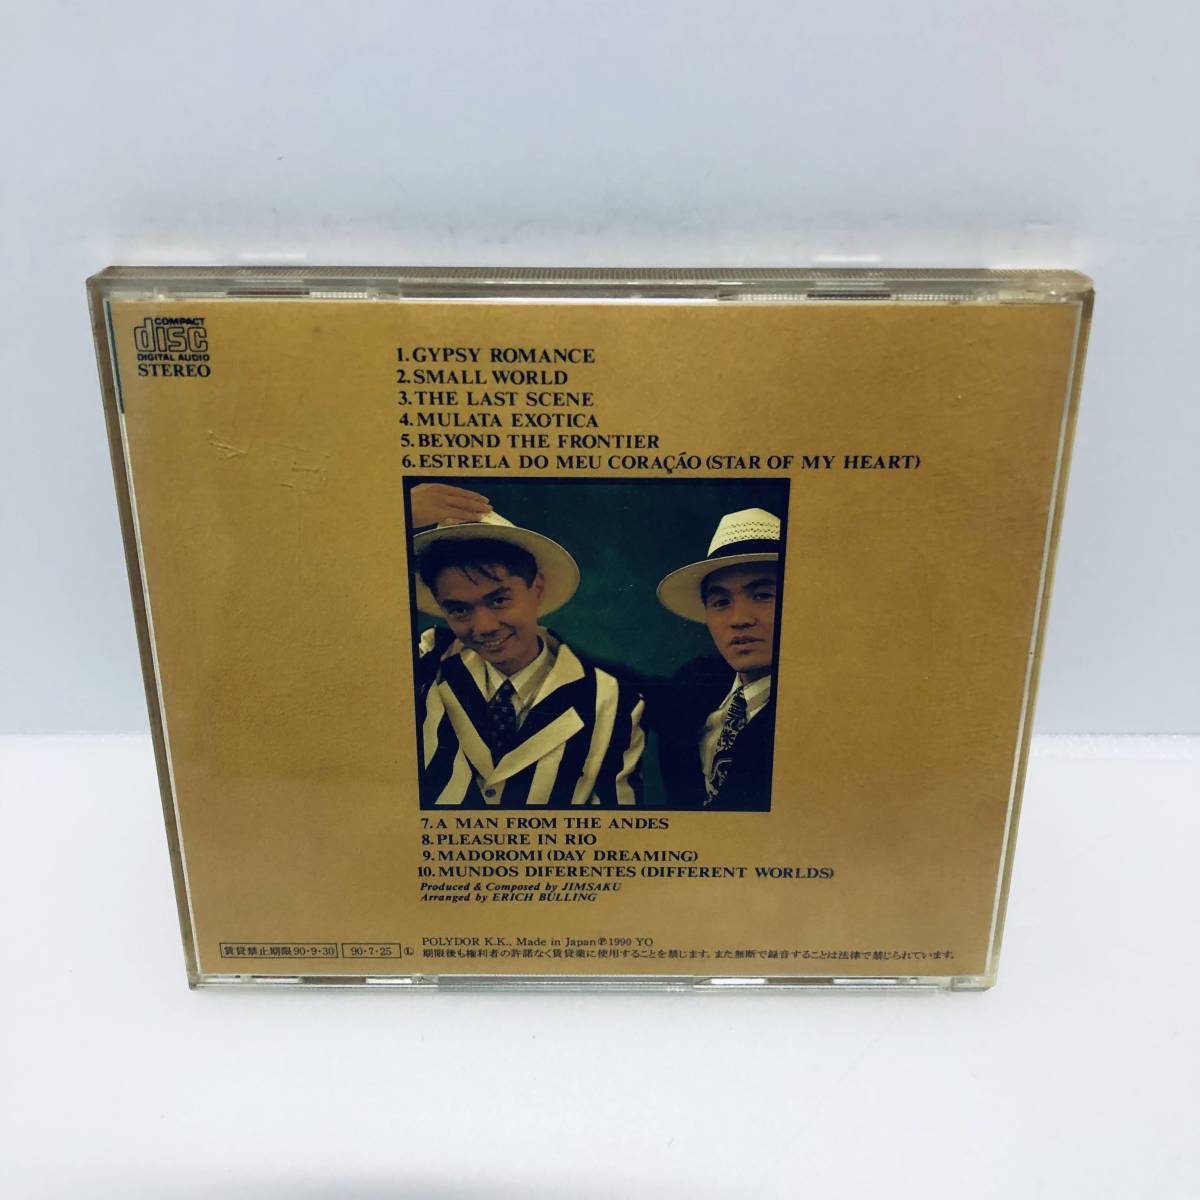 【CD】JIMSAKU / ジンサク 神保彰 櫻井哲夫 90年盤 インストゥルメンタル アルバム POCH-1016 ※その他CDも出品中です！同梱承ります。